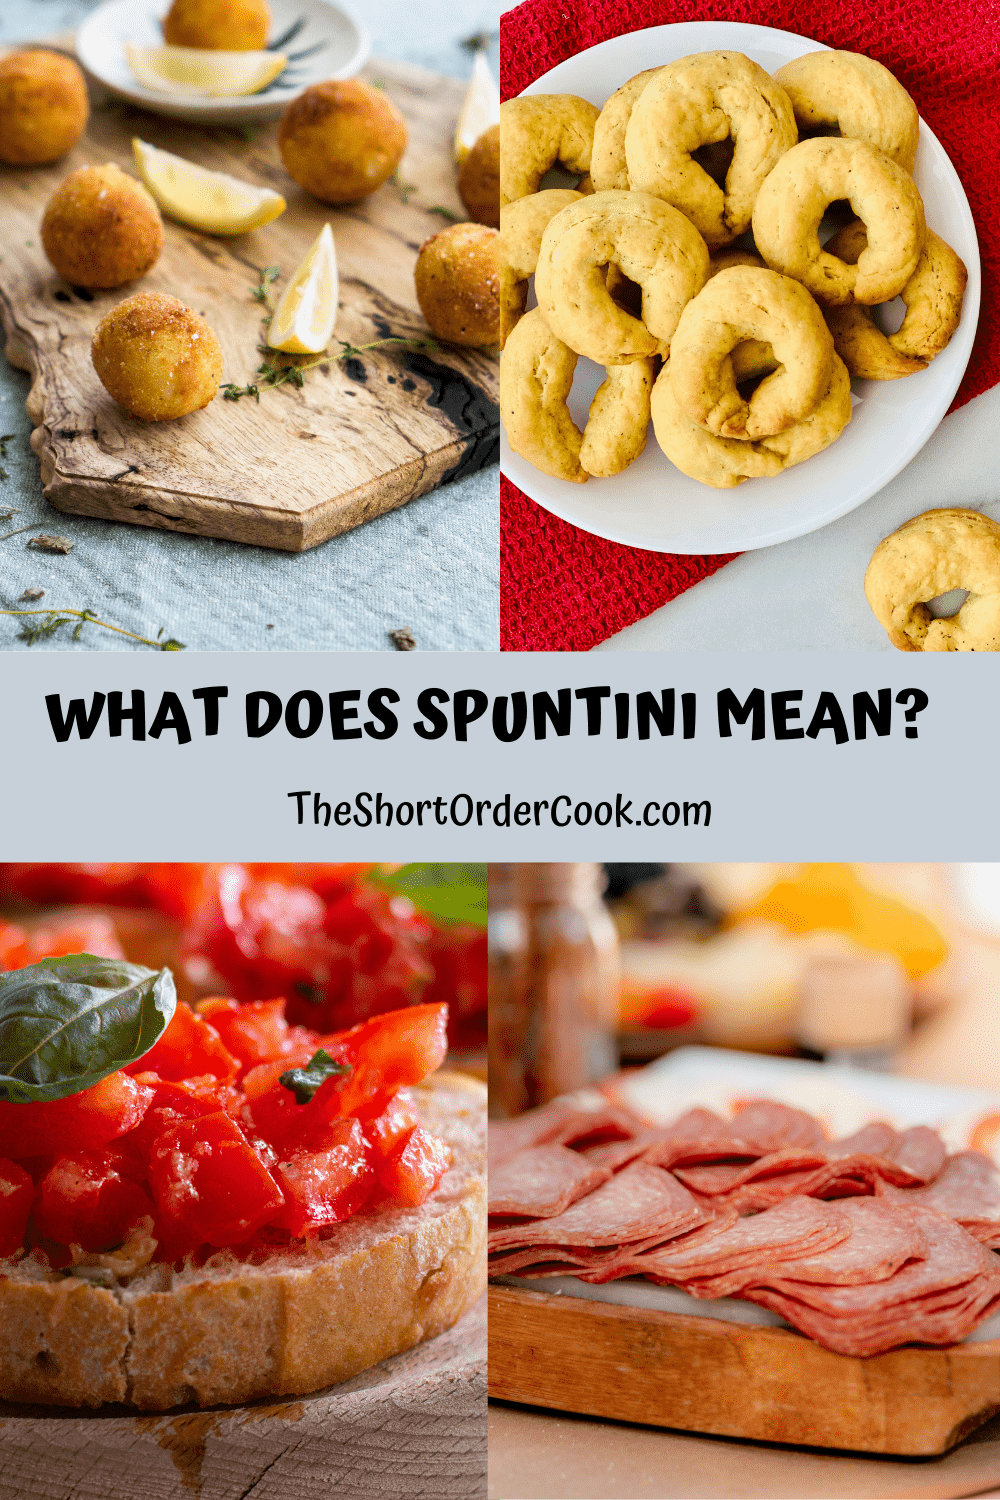 4 recipe images for arancini, bruschetta, taralli, and salami for spuntini snacks.